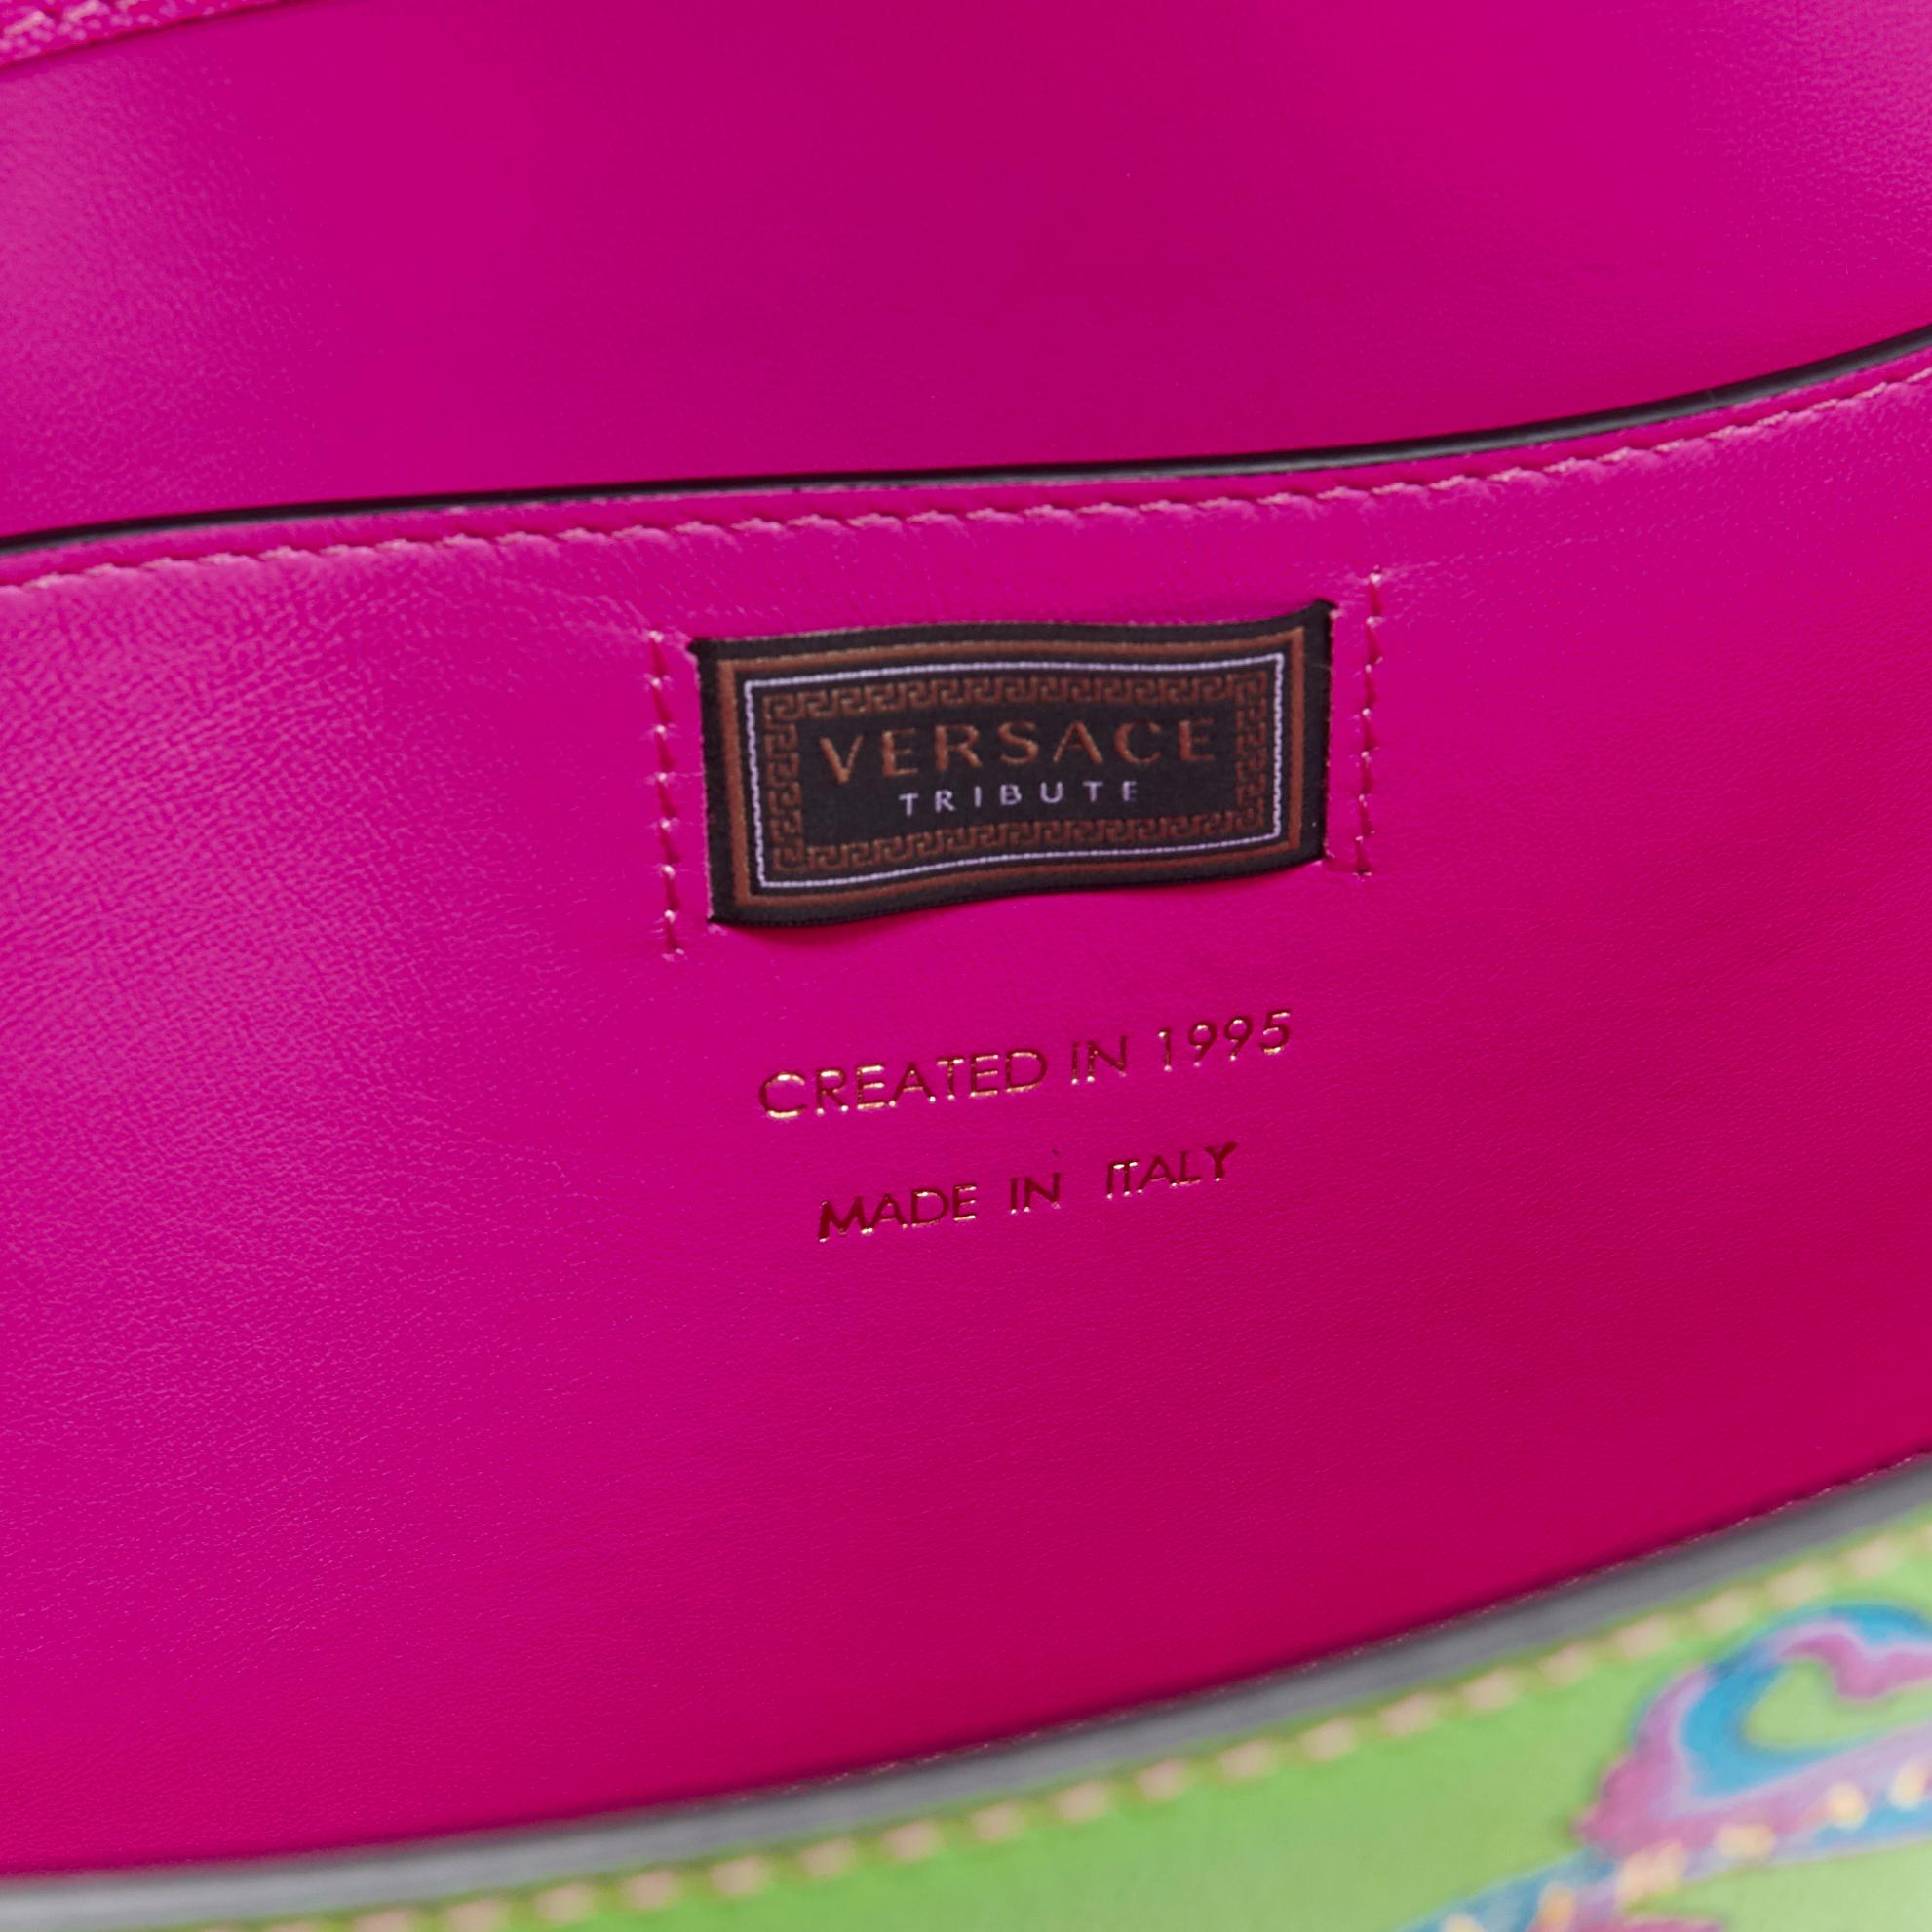 new VERSACE Technicolor Baroque Diana Tribute print top handle Kelly satchel bag 6